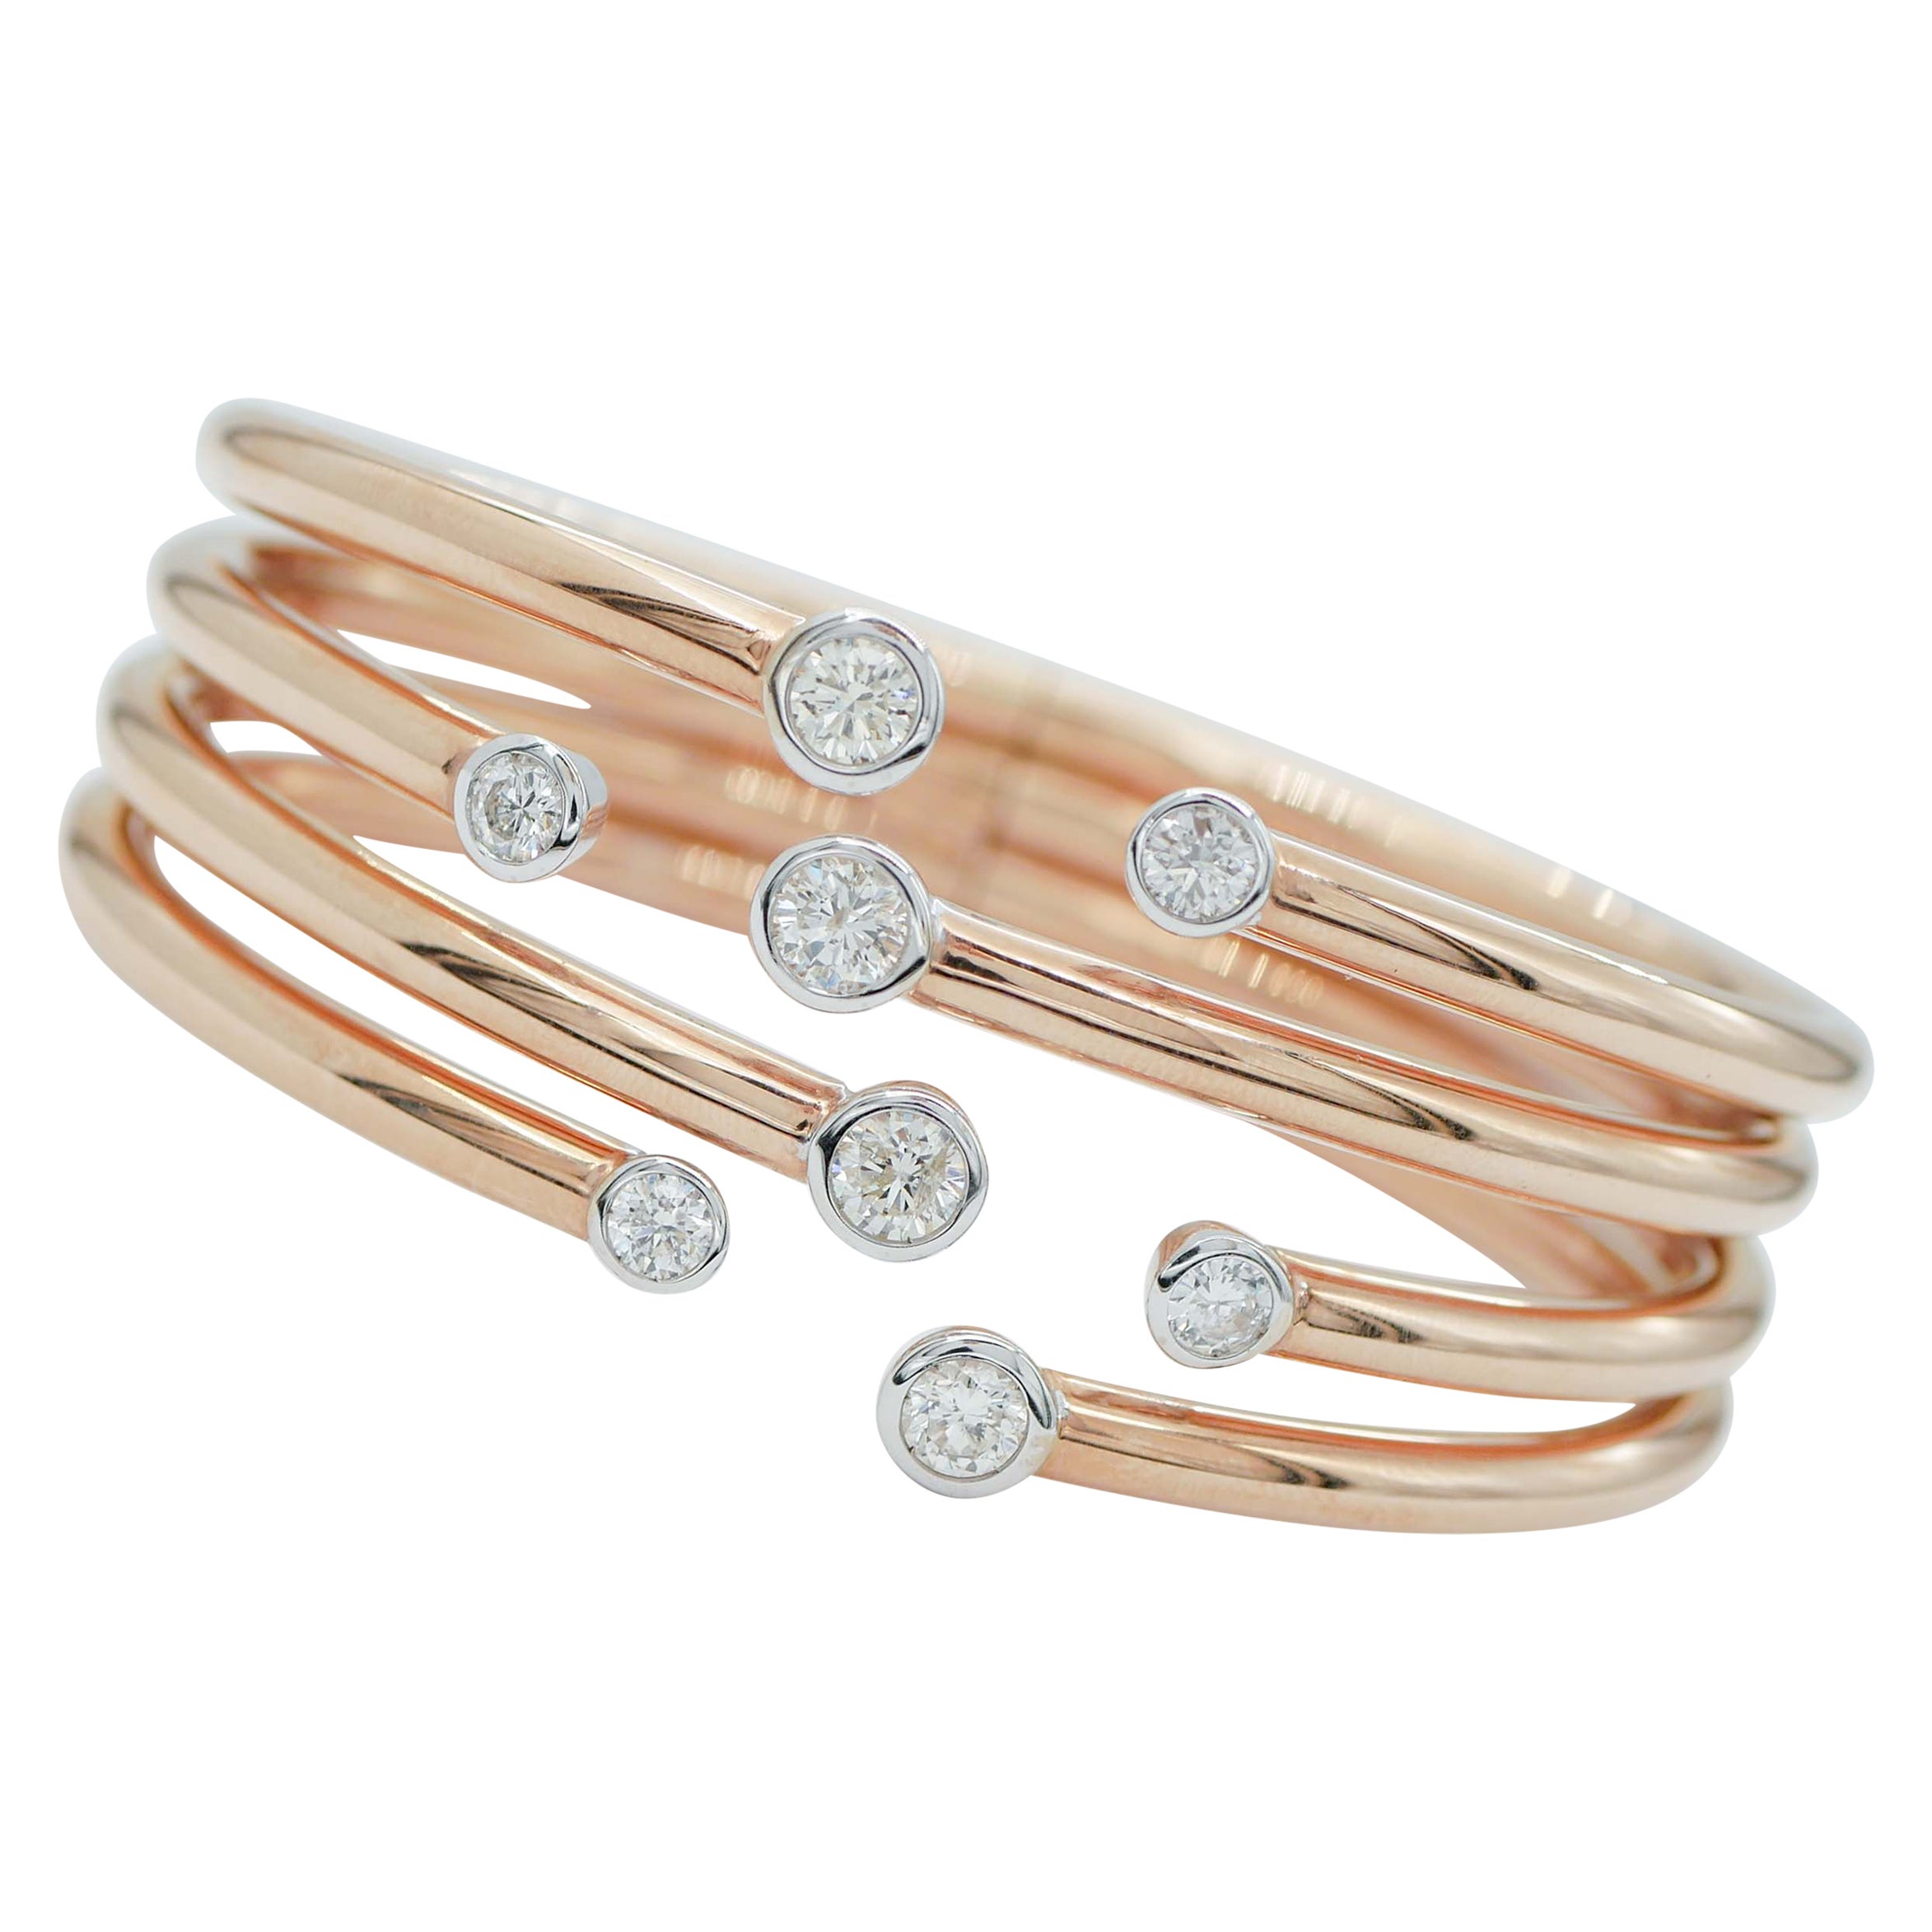 Bracelet moderne en or rose et blanc 18 carats et diamants